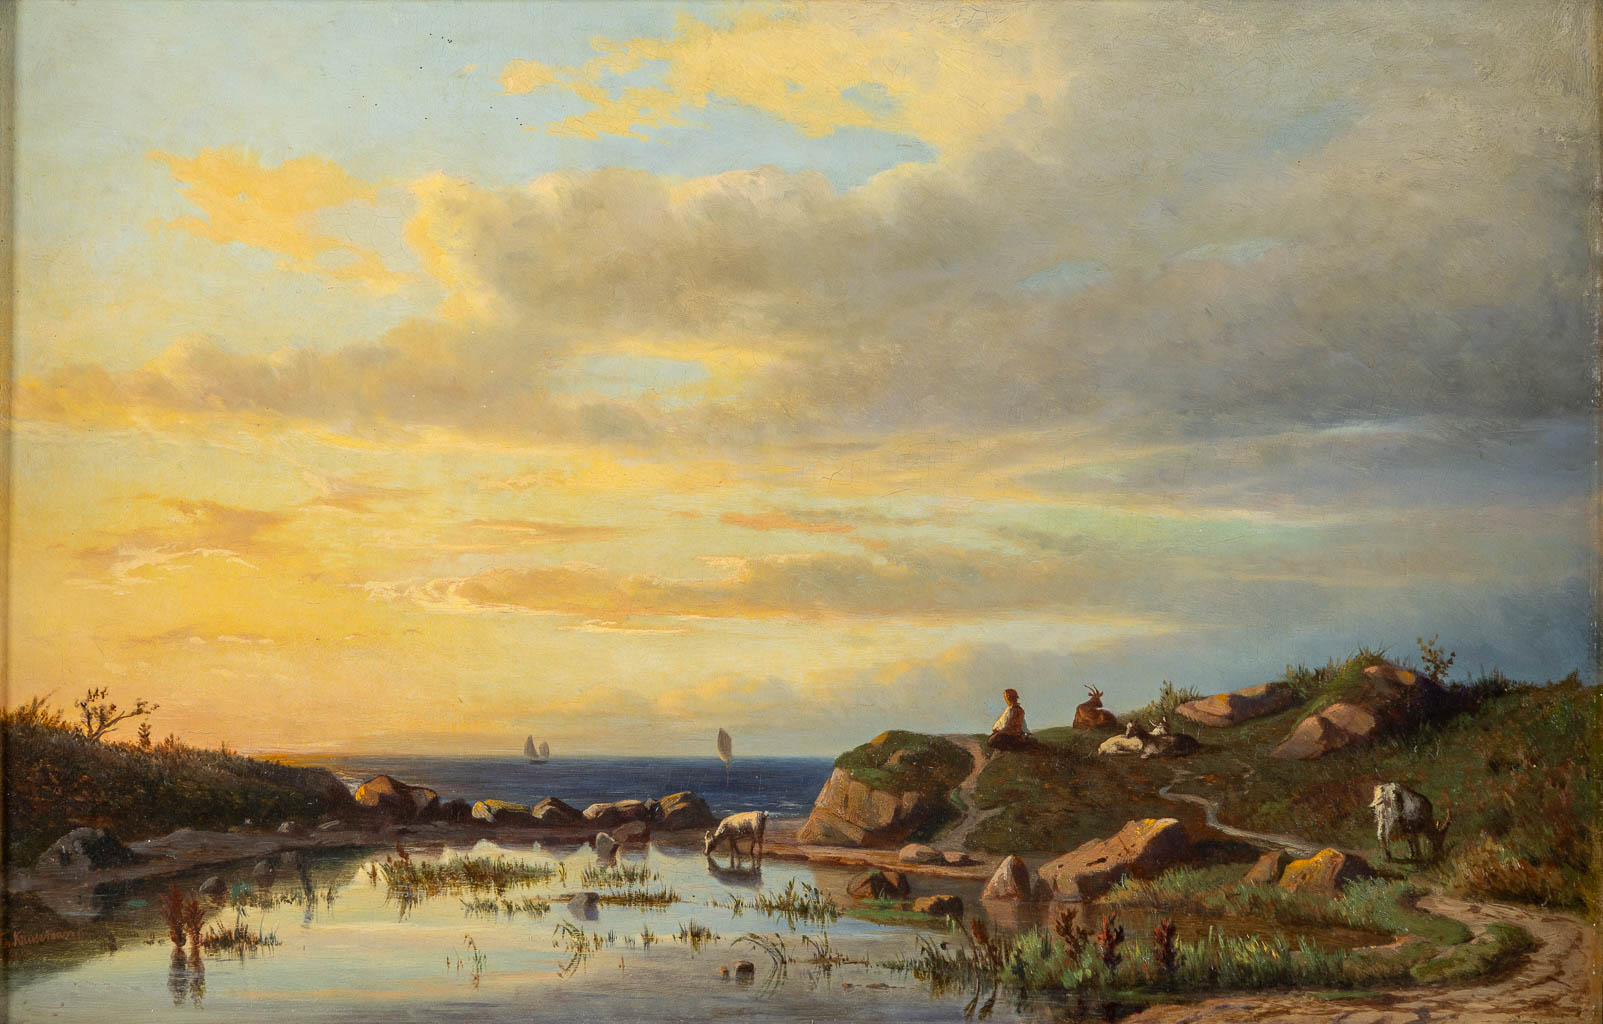  Jan Théodore KRUSEMAN (1835-1895) 'Zeezicht bij zonsondergang' 1861. 